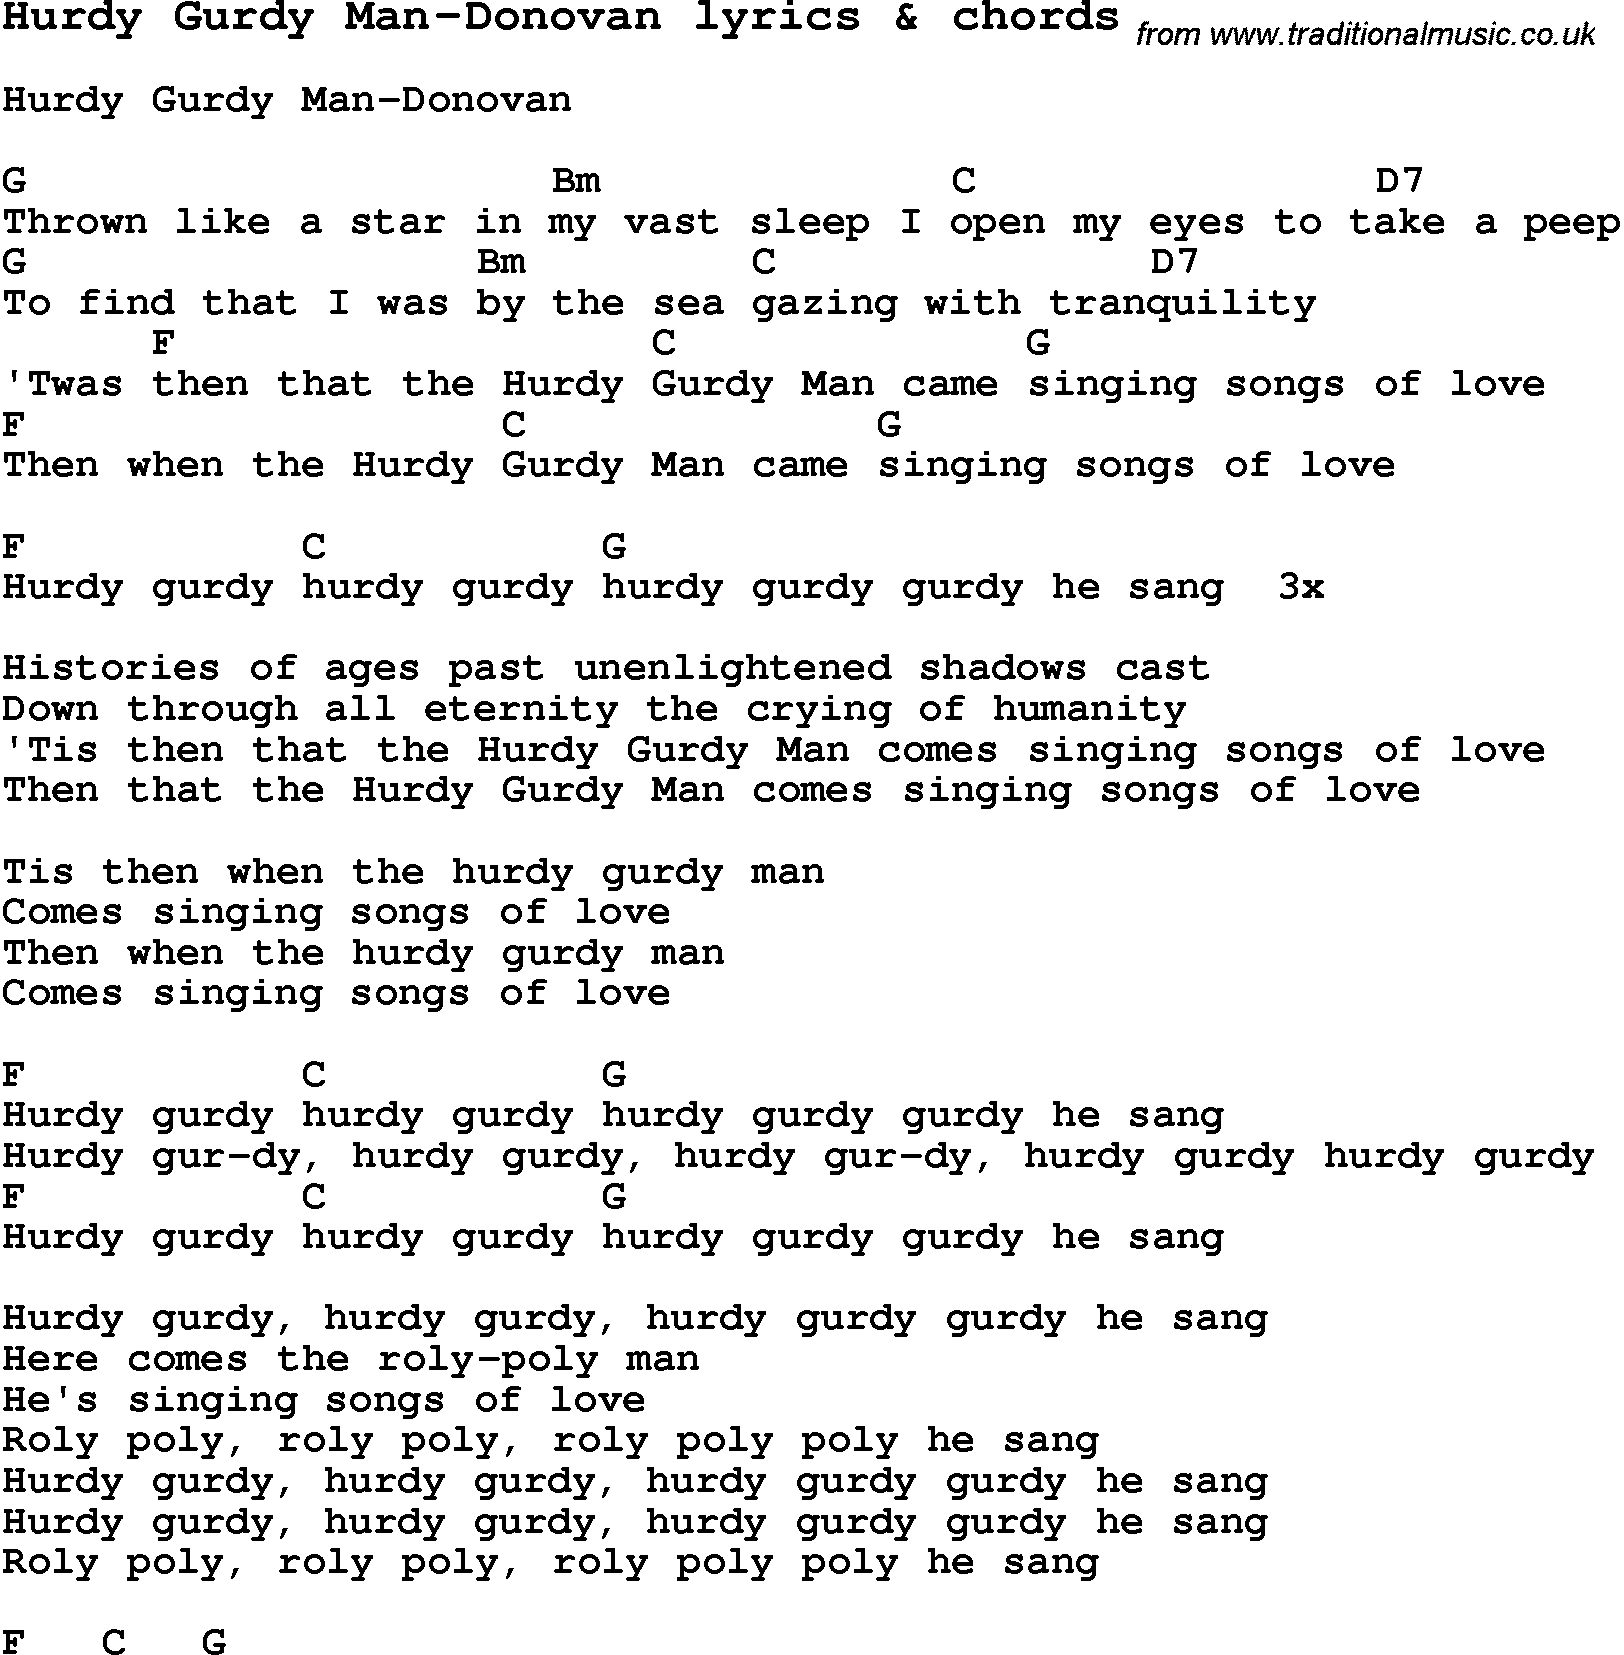 Love Song Lyrics for: Hurdy Gurdy Man-Donovan with chords for Ukulele, Guitar Banjo etc.